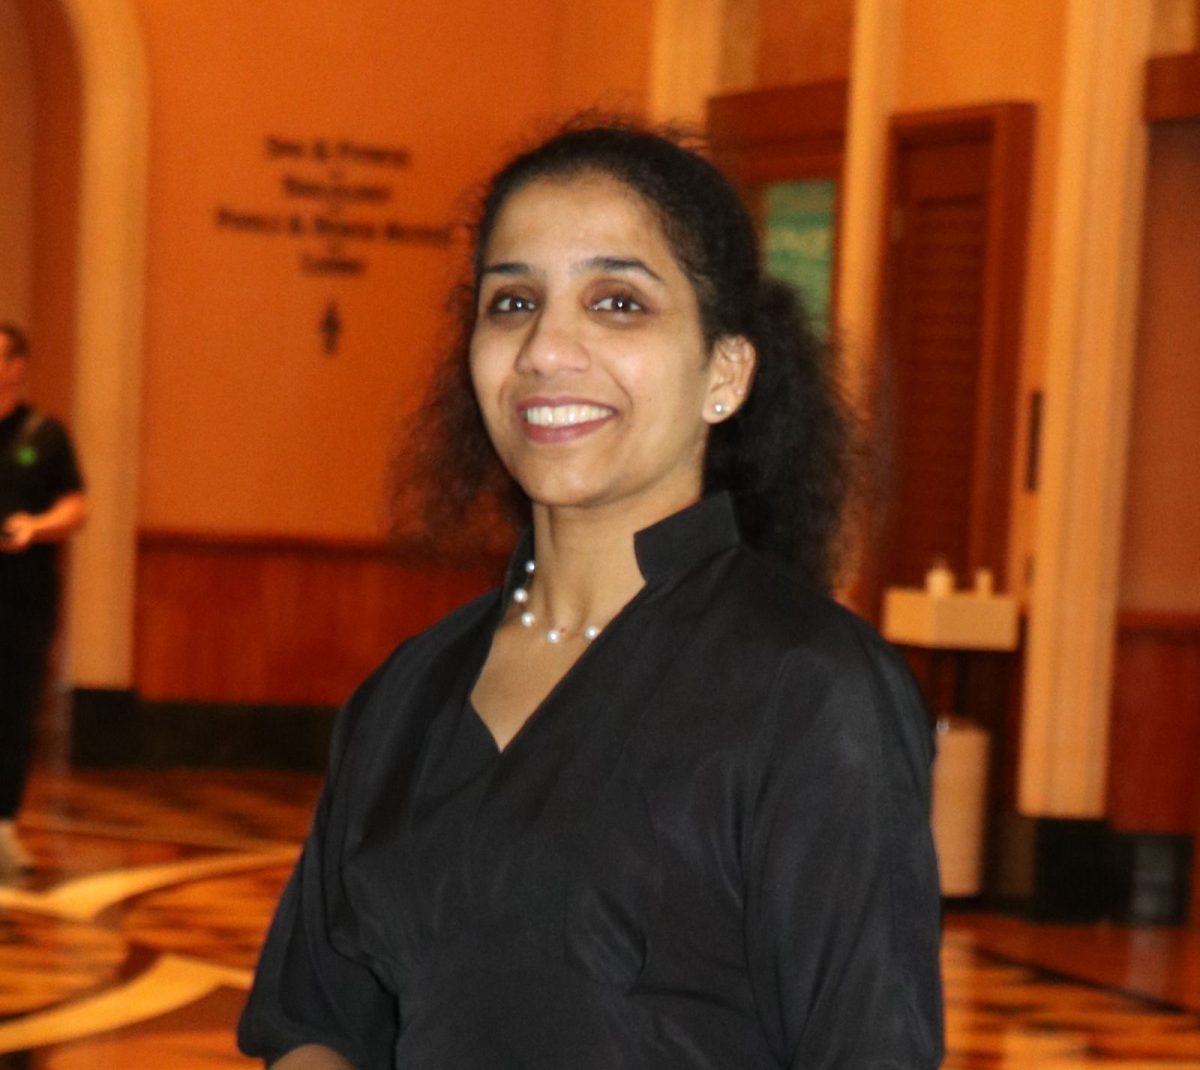 Indian Teacher From UAE Wins Prestigious Cambridge Teacher Award